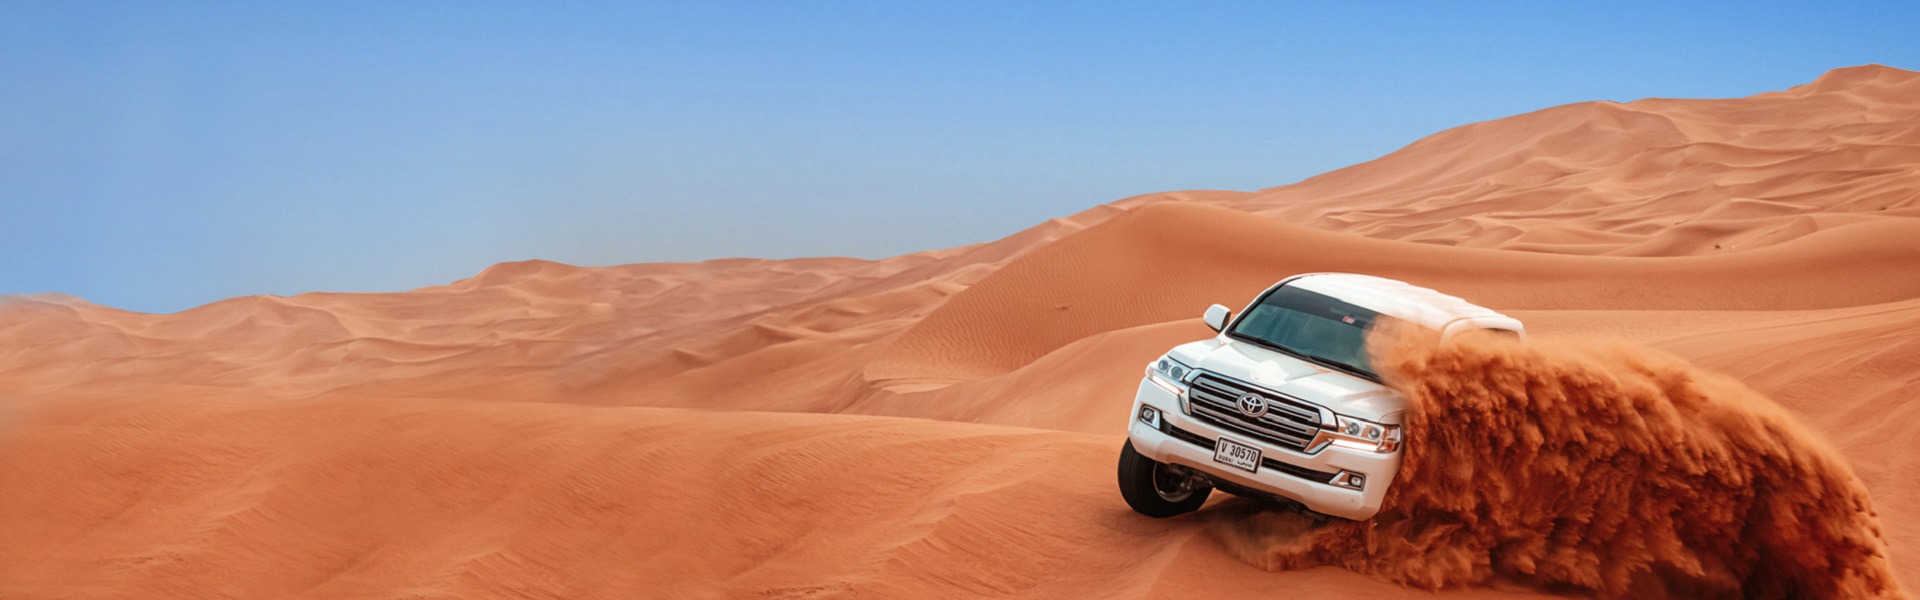 Royal Car Rental Group | Royal car rental group | Desert safari in Dubai